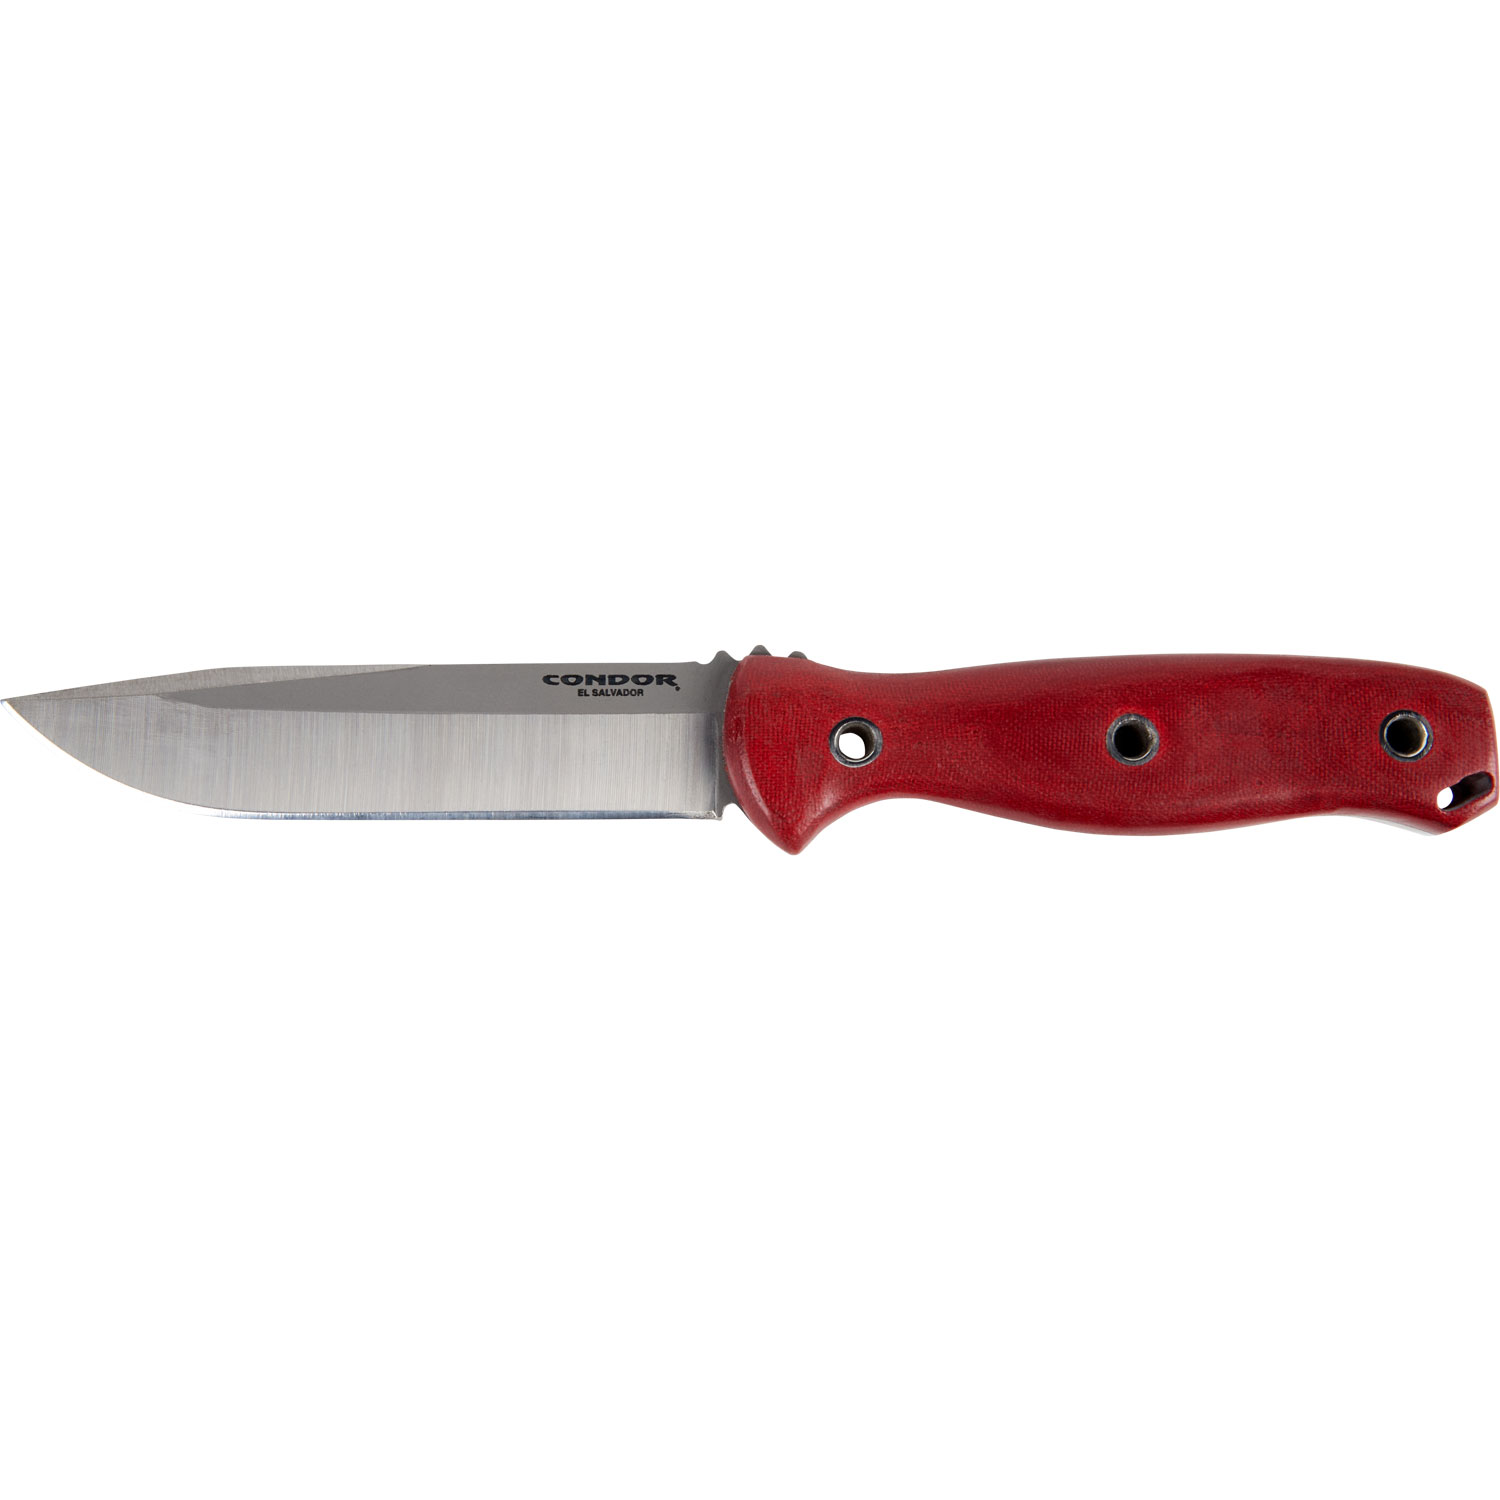 Trade Knife Inspired Bush-craft Knife Blade 